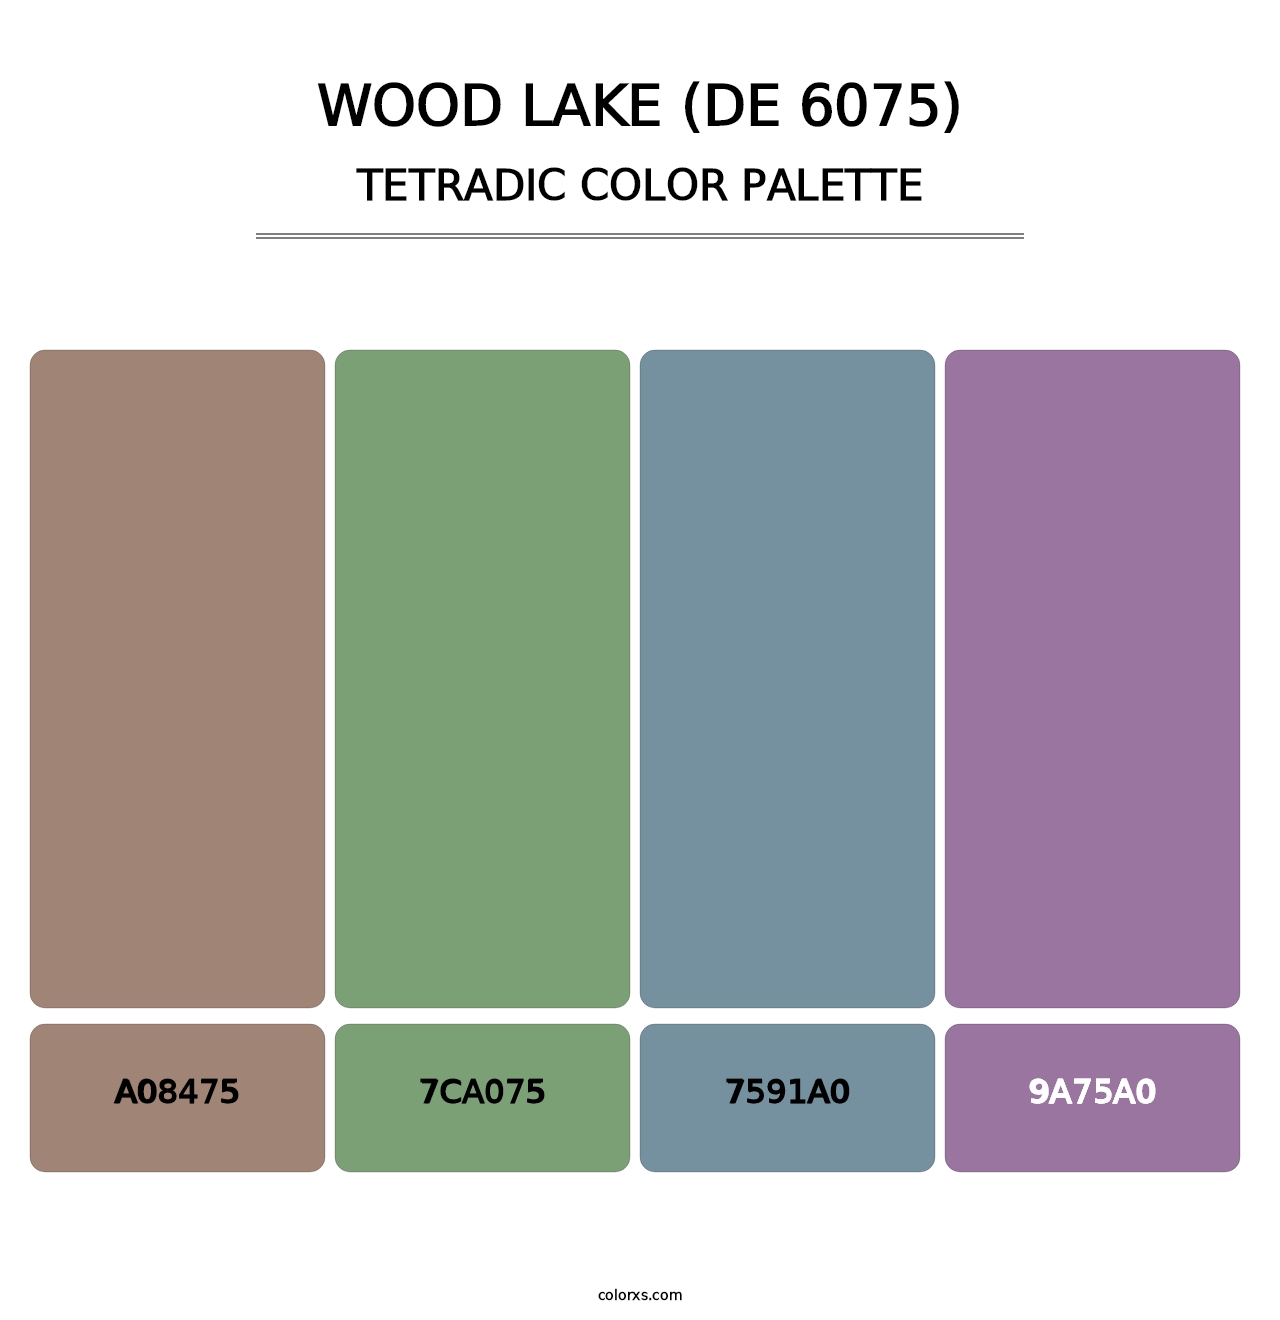 Wood Lake (DE 6075) - Tetradic Color Palette